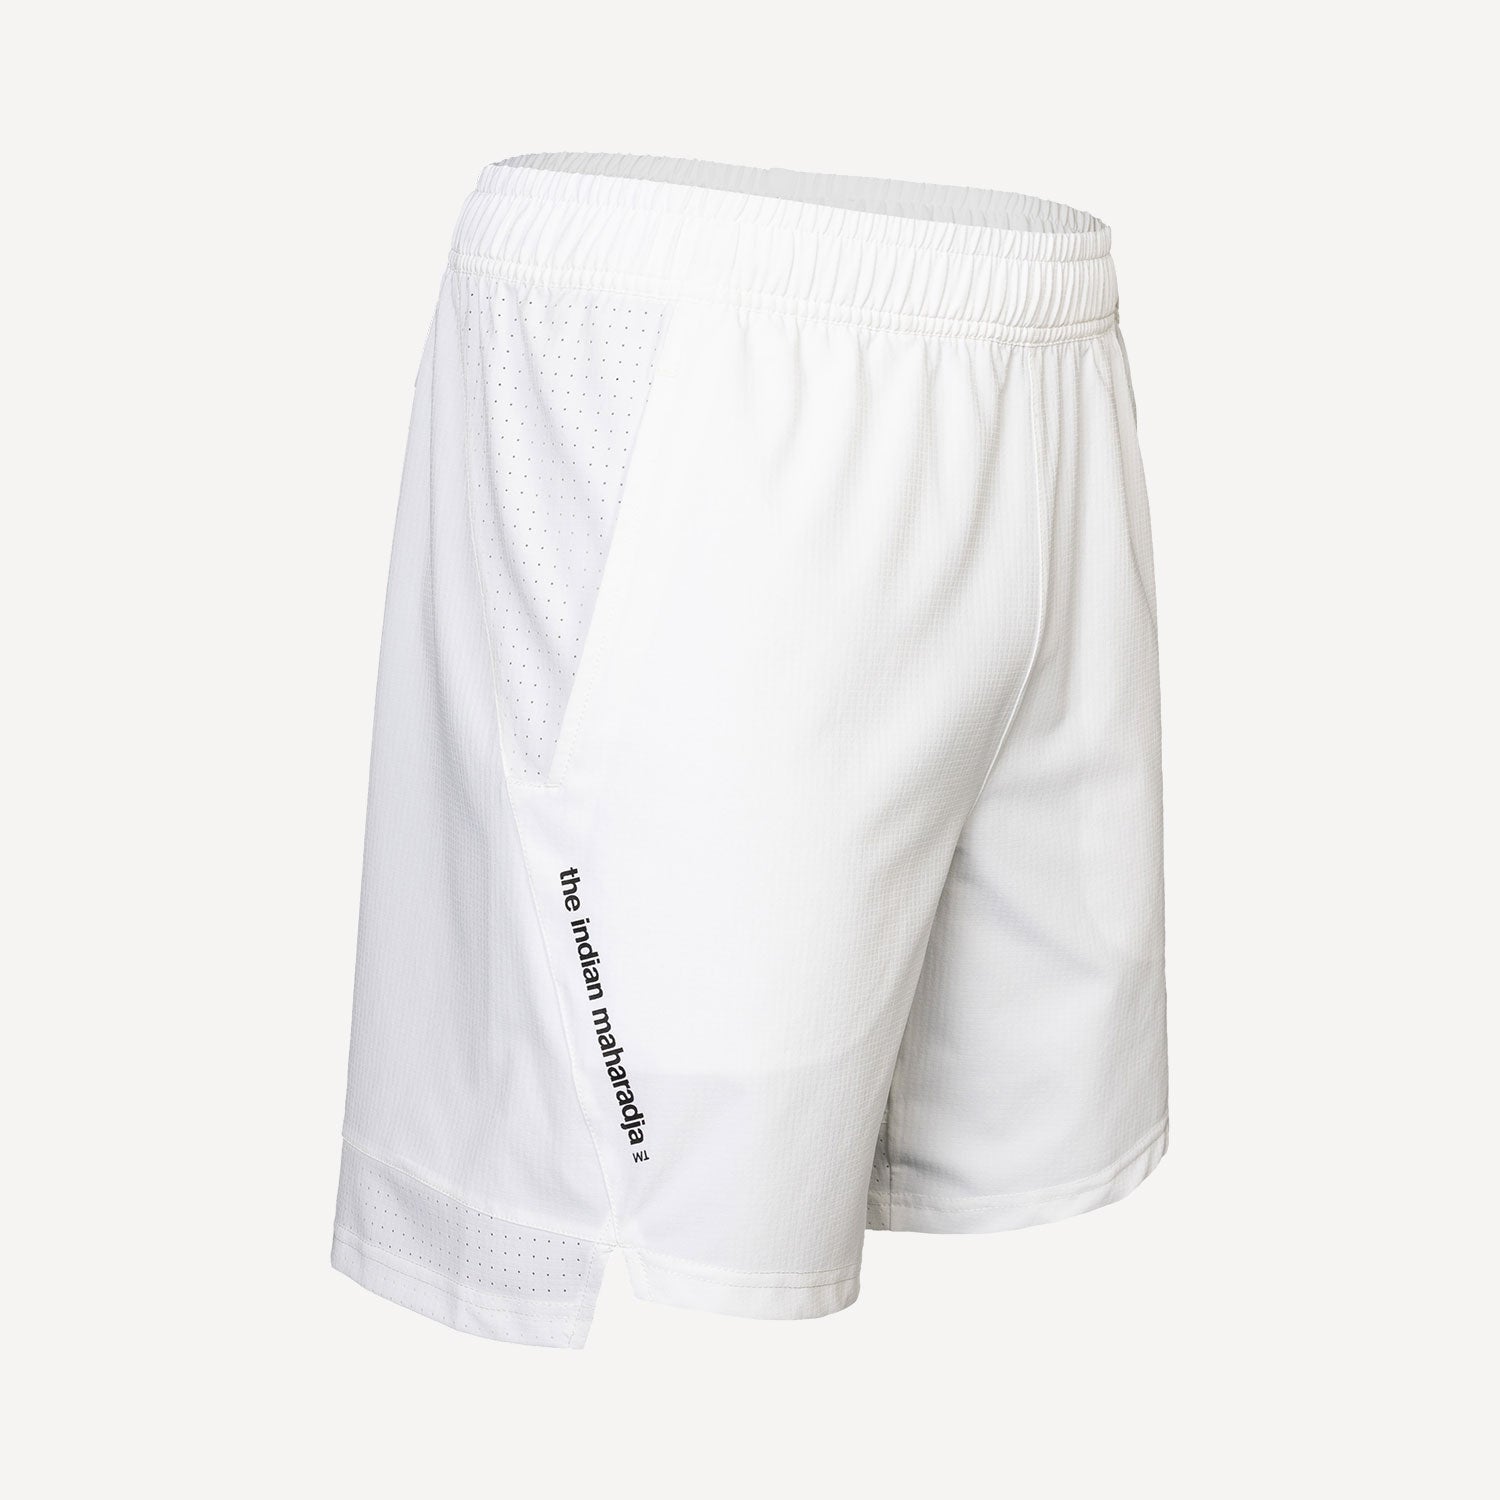 The Indian Maharadja Kadiri Men's Agility Tennis Shorts - White (3)